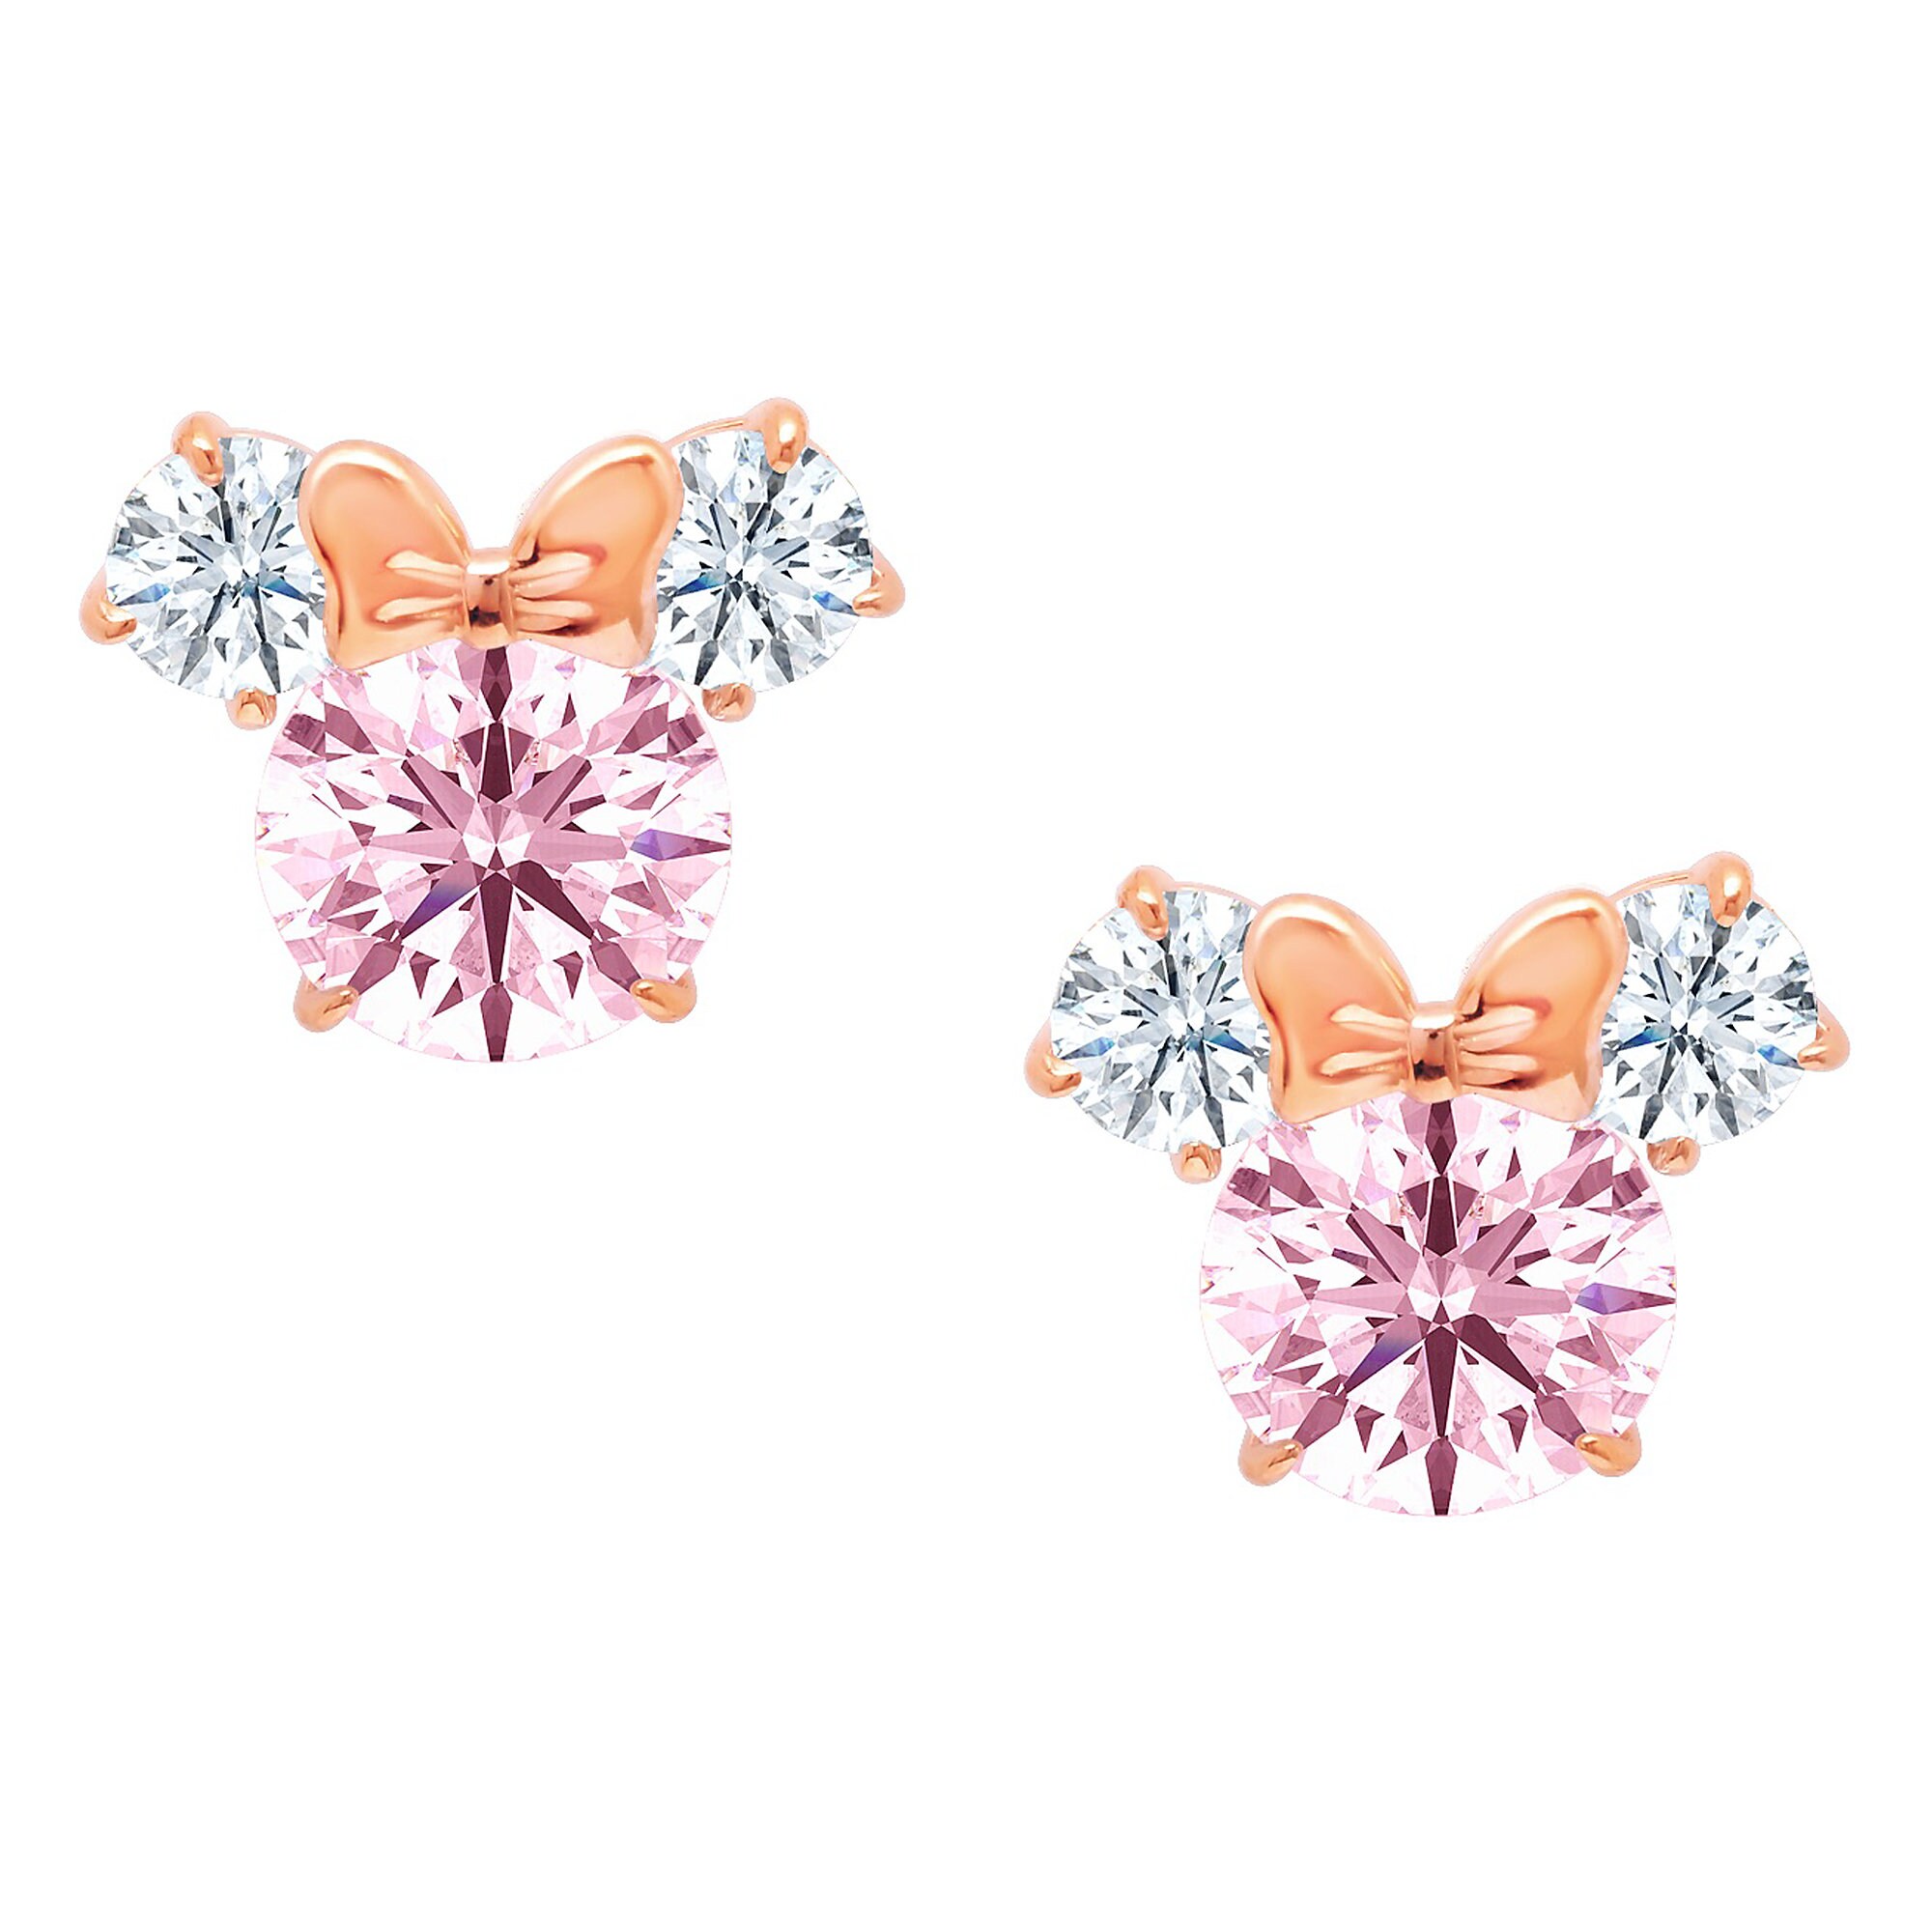 Minnie Mouse Earrings for Kids by CRISLU - Pink